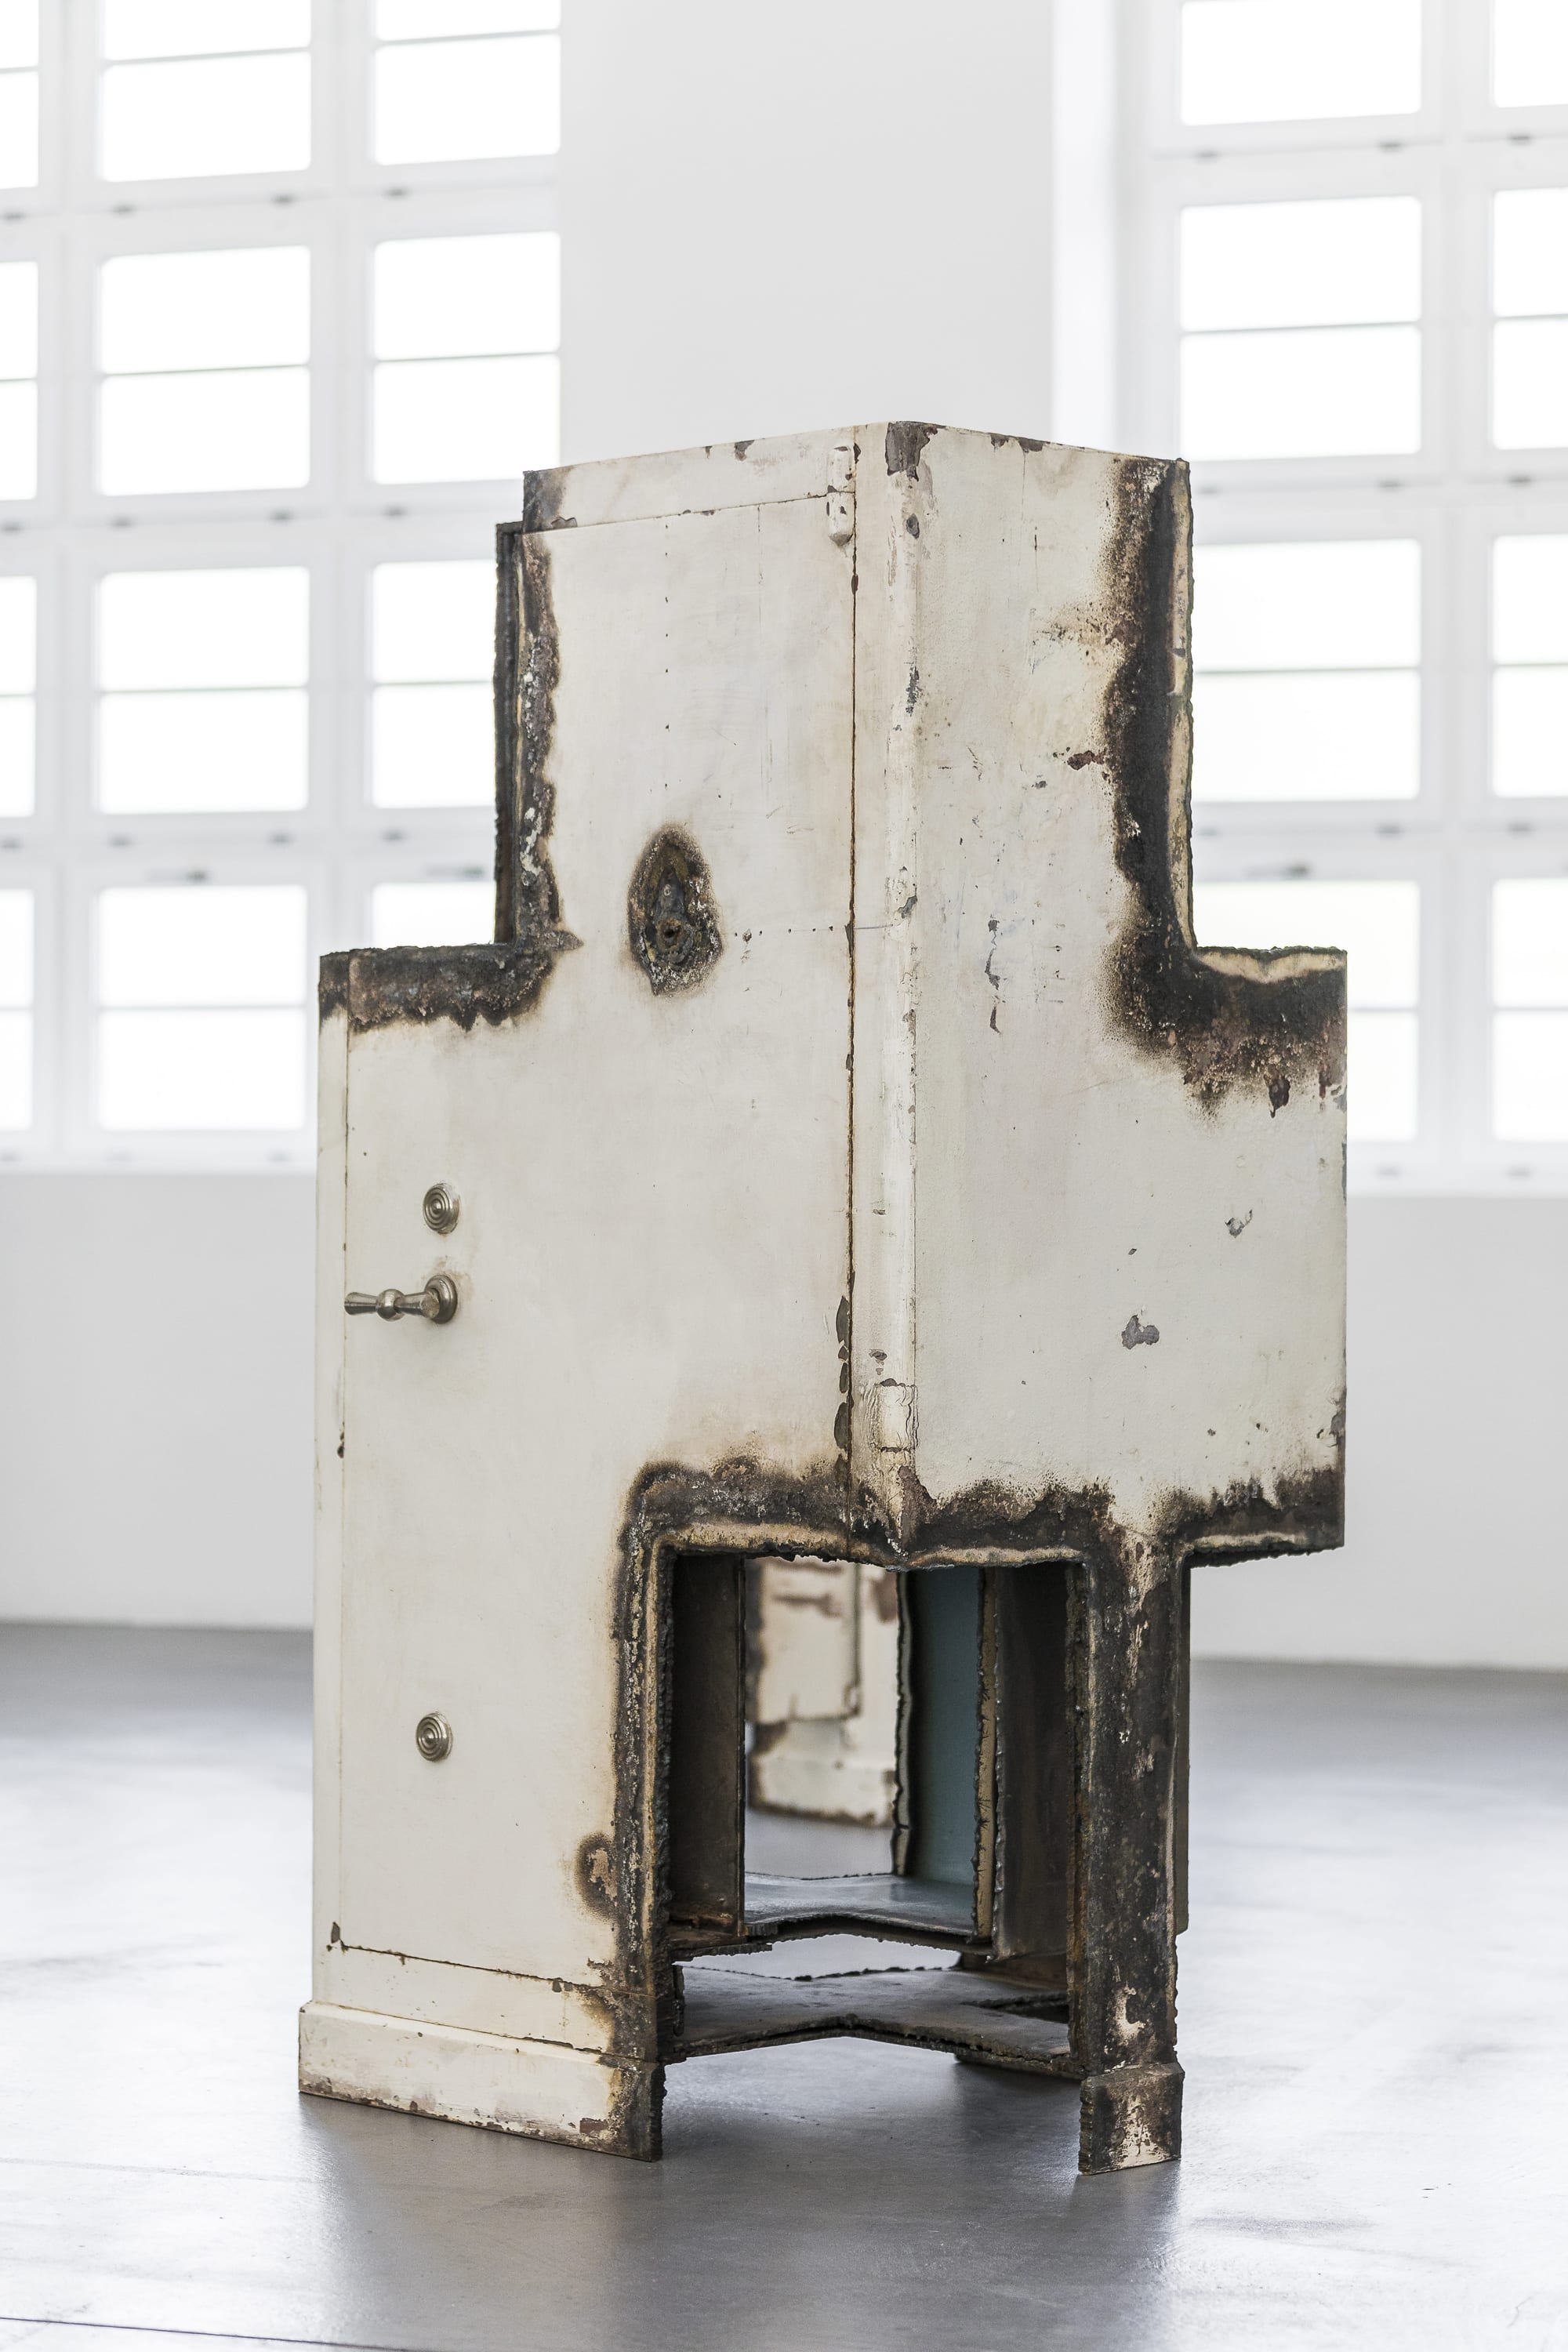 strongbox safe deposit box security installation house constructive scholarship exhibition Gordon Matta Clark Walo object sculpture